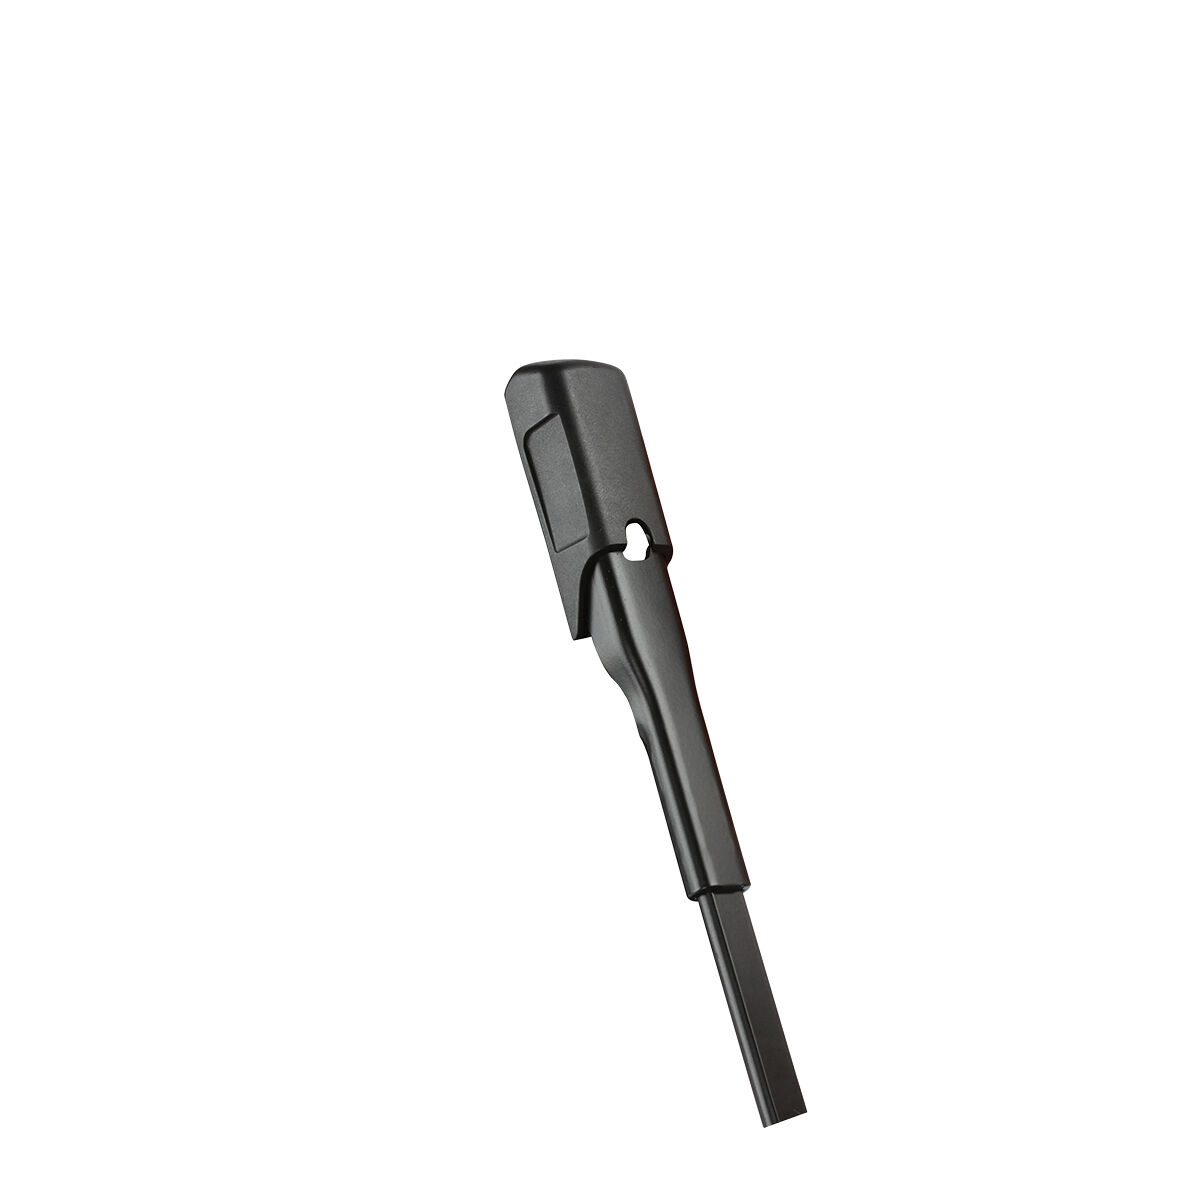 Tridon FlexBlade Wiper 600mm (24") NX, Single - TFB181, , scaau_hi-res